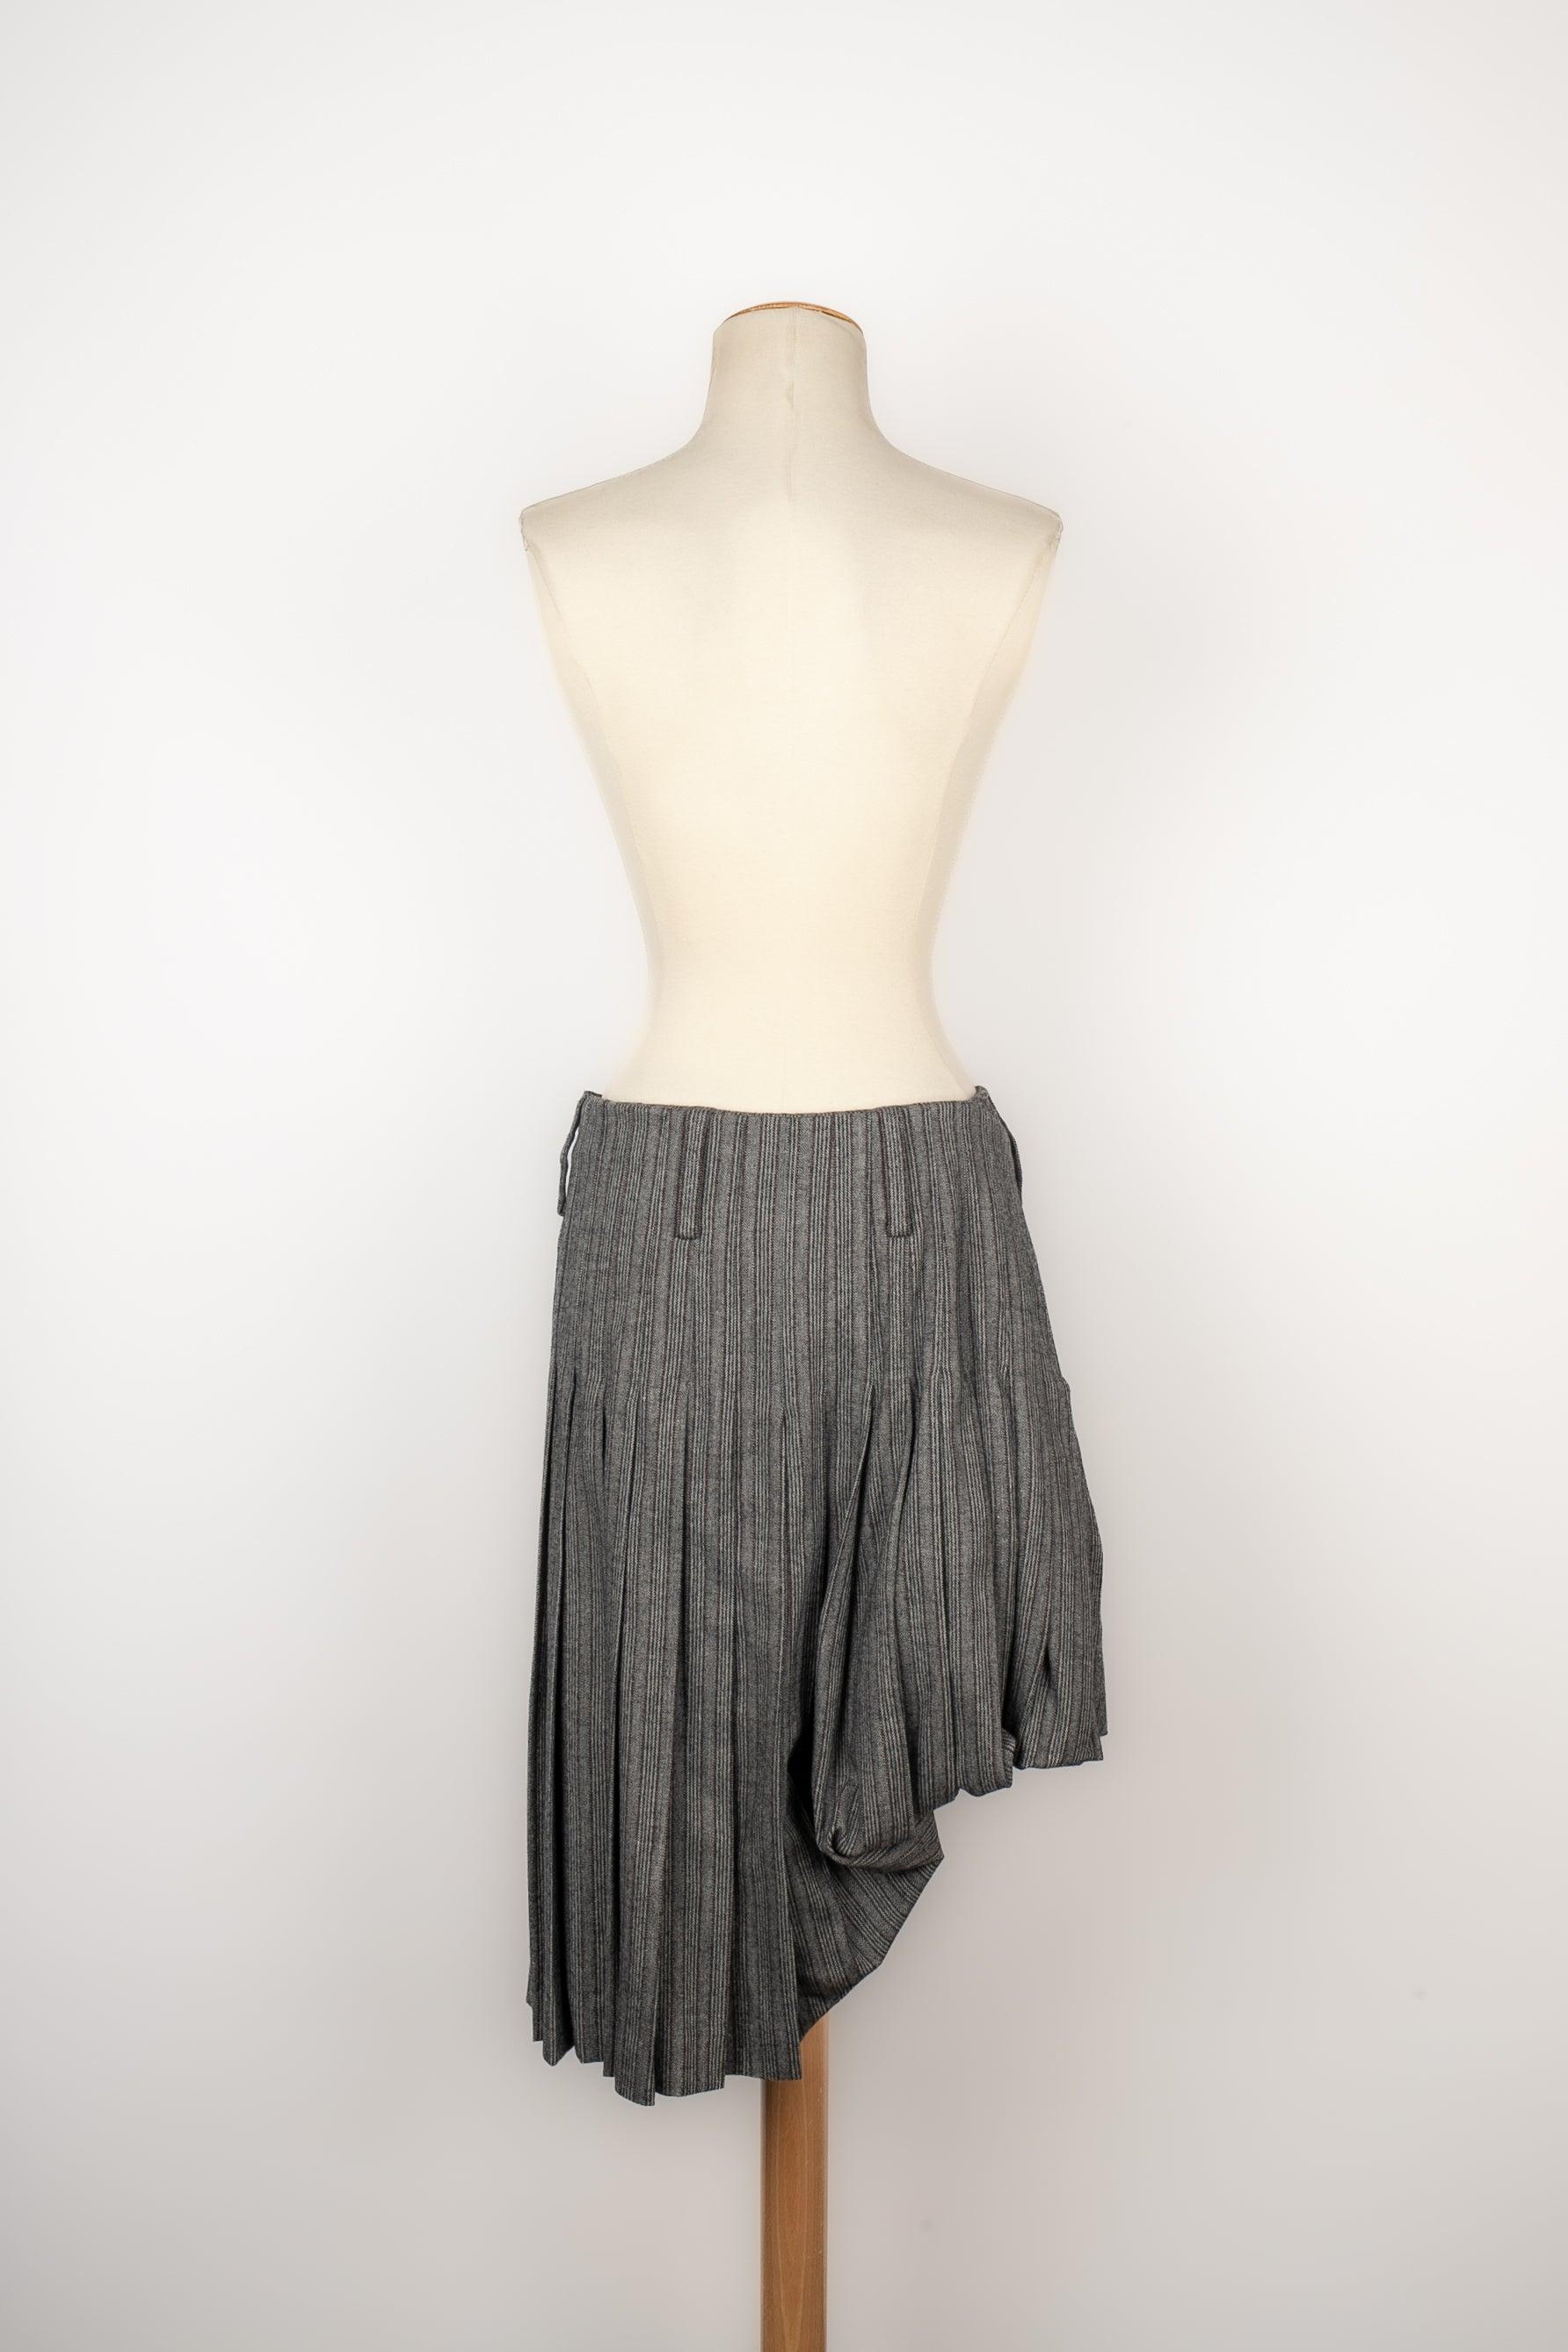 Alexander Mcqueen Blended Wool Skirt, 2006 In Excellent Condition For Sale In SAINT-OUEN-SUR-SEINE, FR